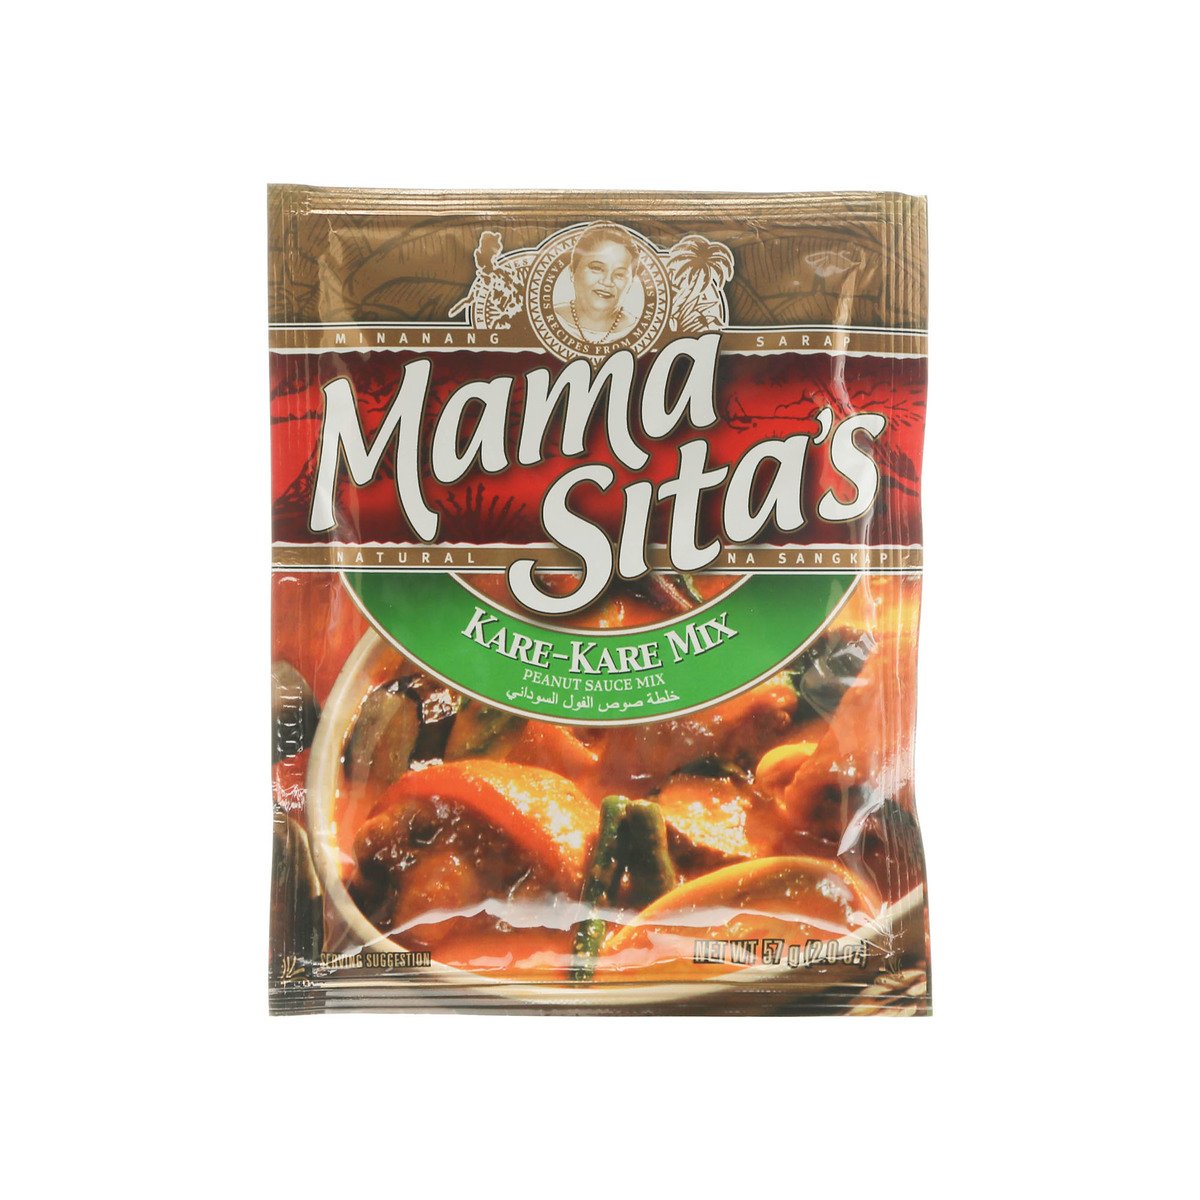 Mama Sita's Peanut Sauce Mix (Kare-Kare) 57g